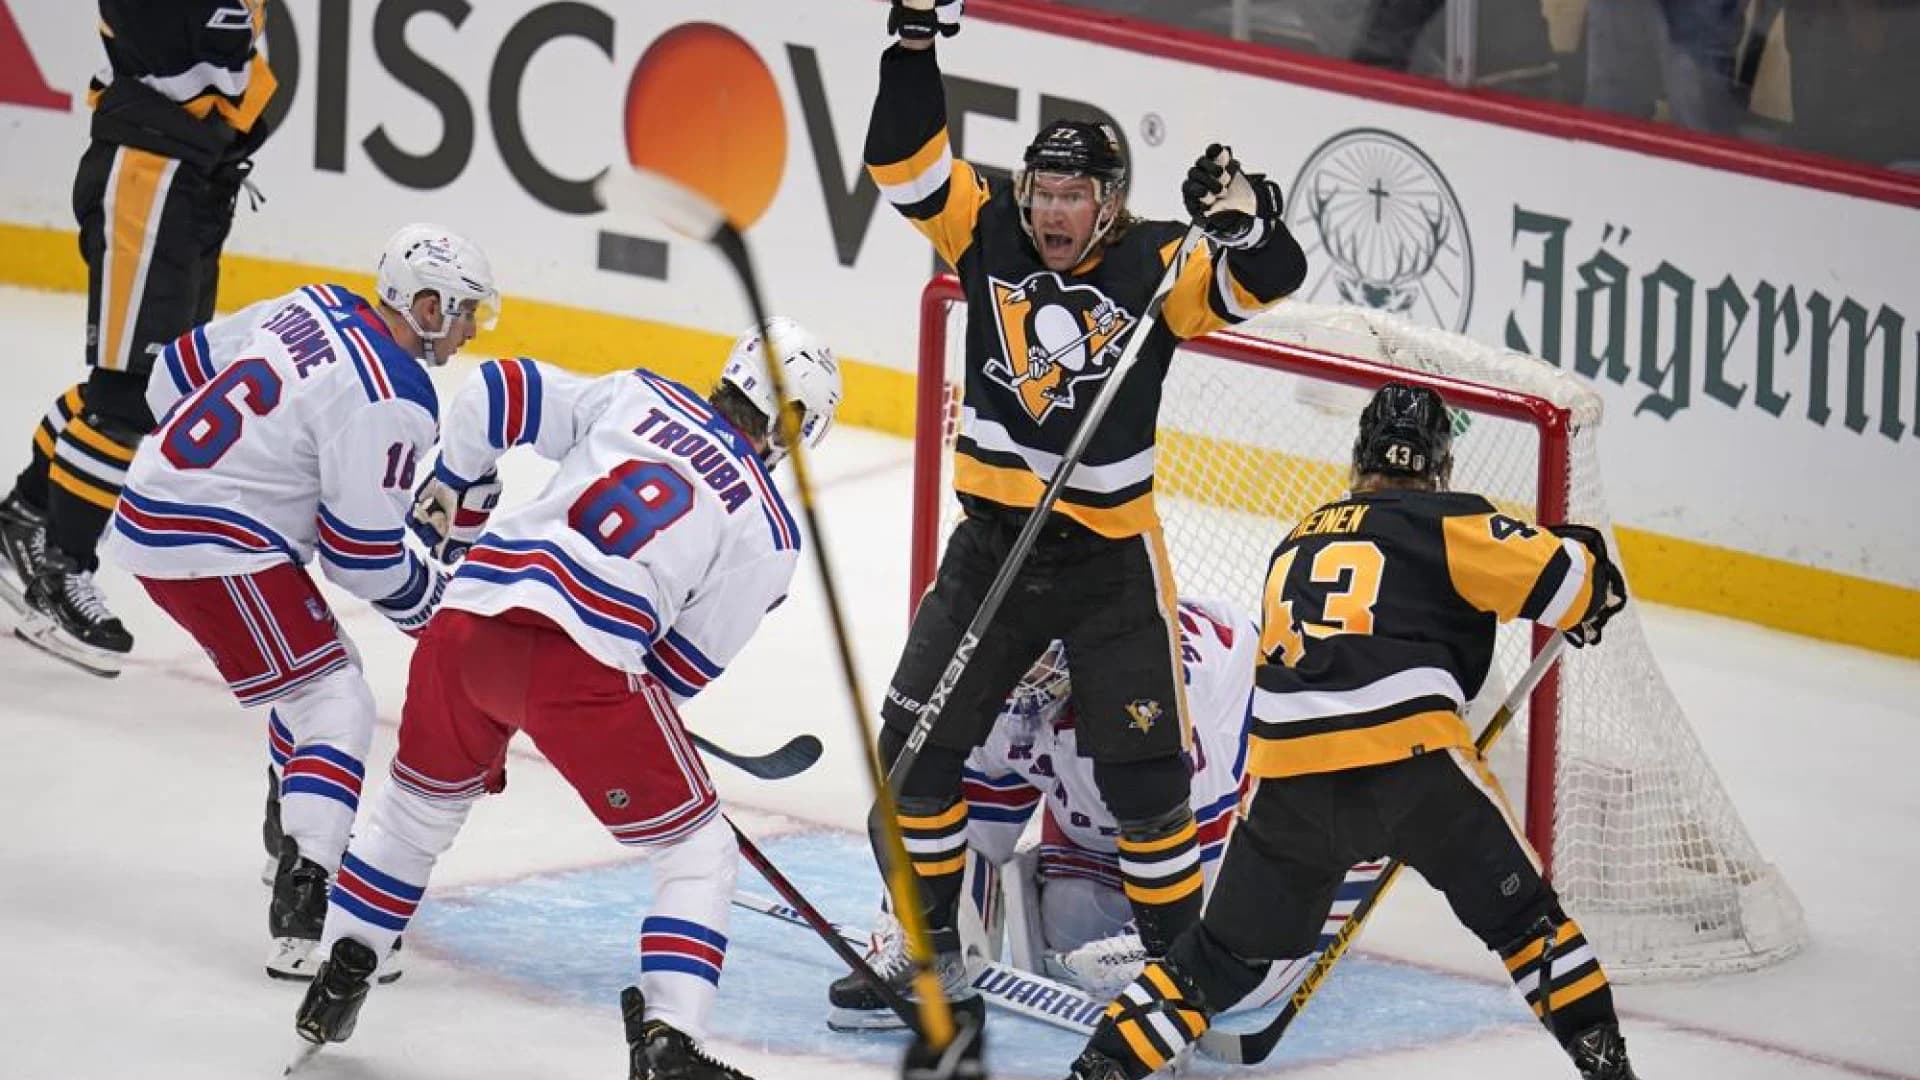 Heinen’s goal ignites late surge, Penguins top Rangers 7-4